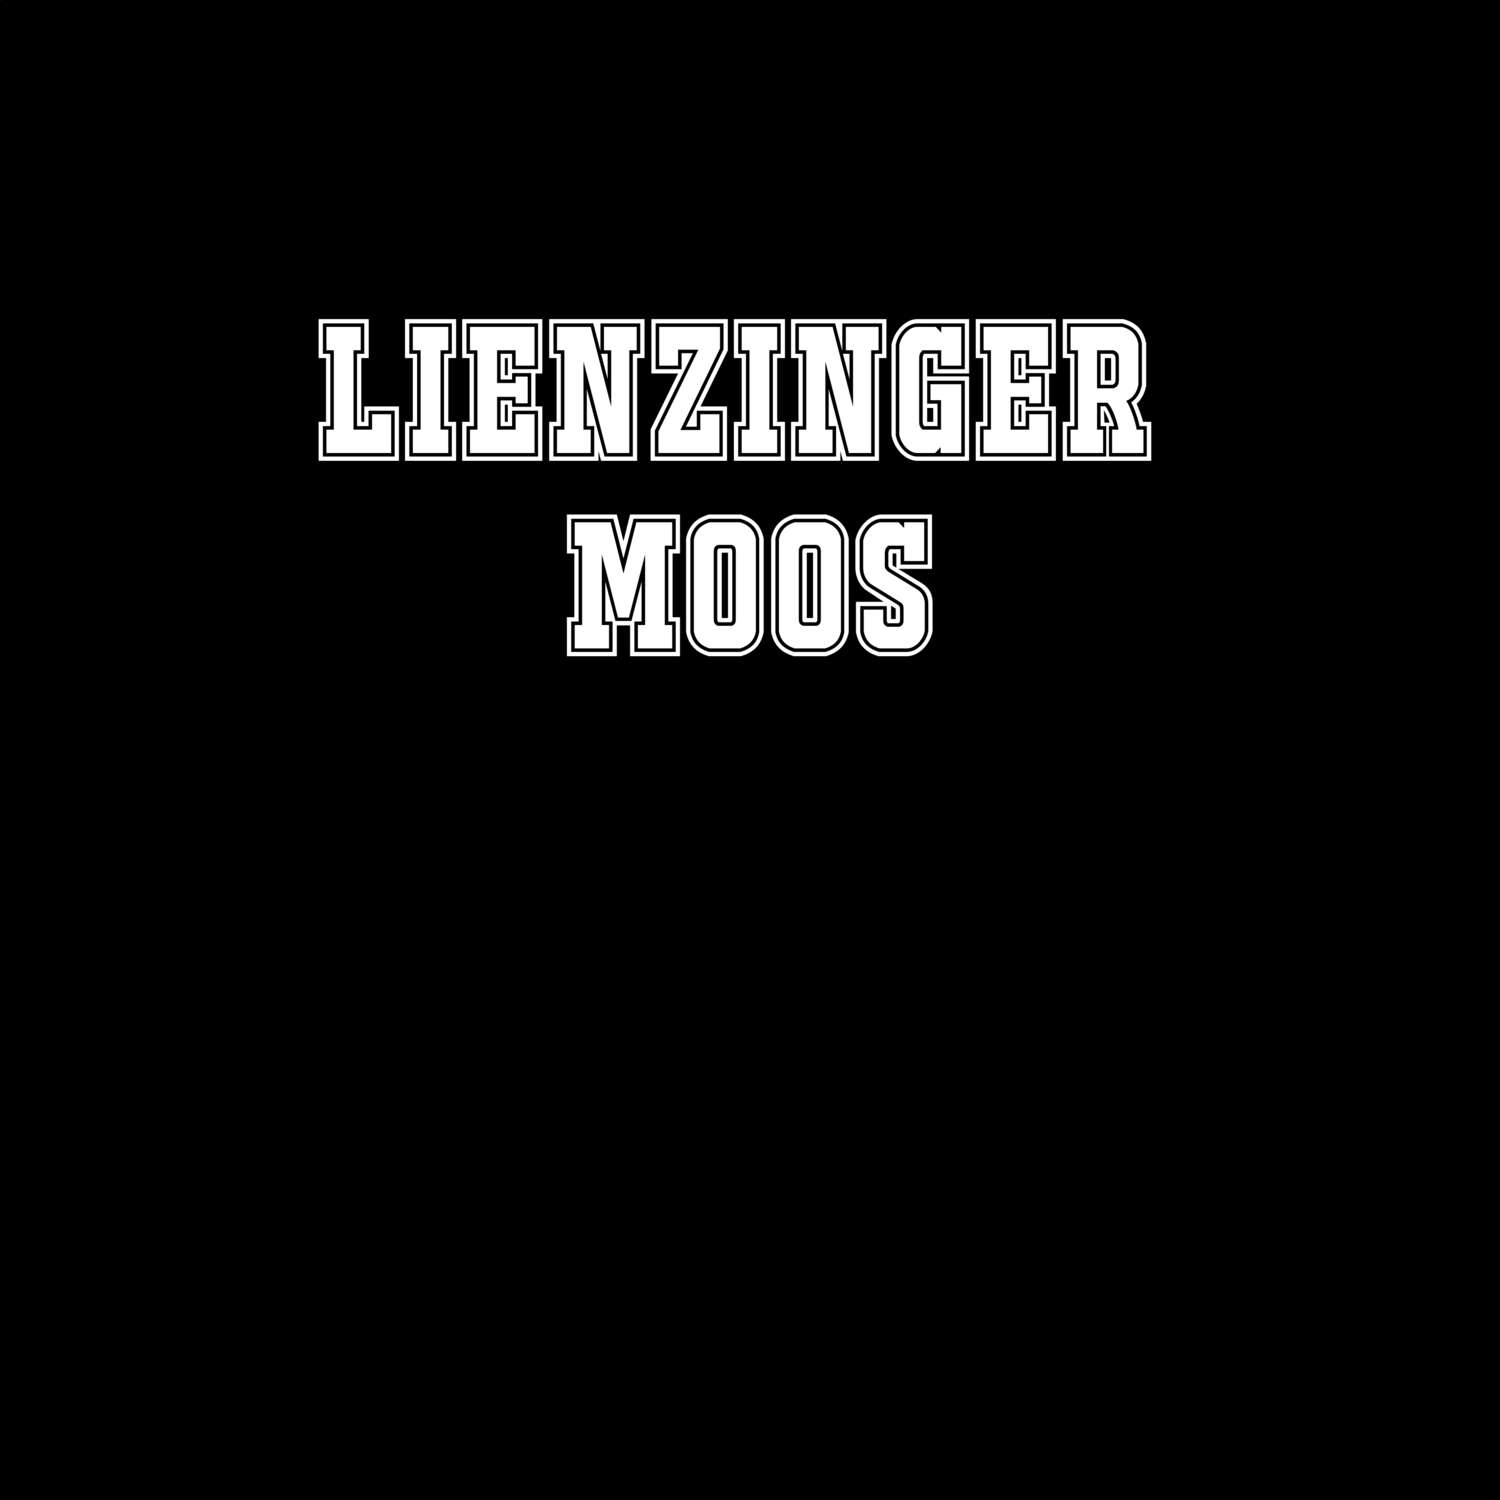 Lienzinger Moos T-Shirt »Classic«